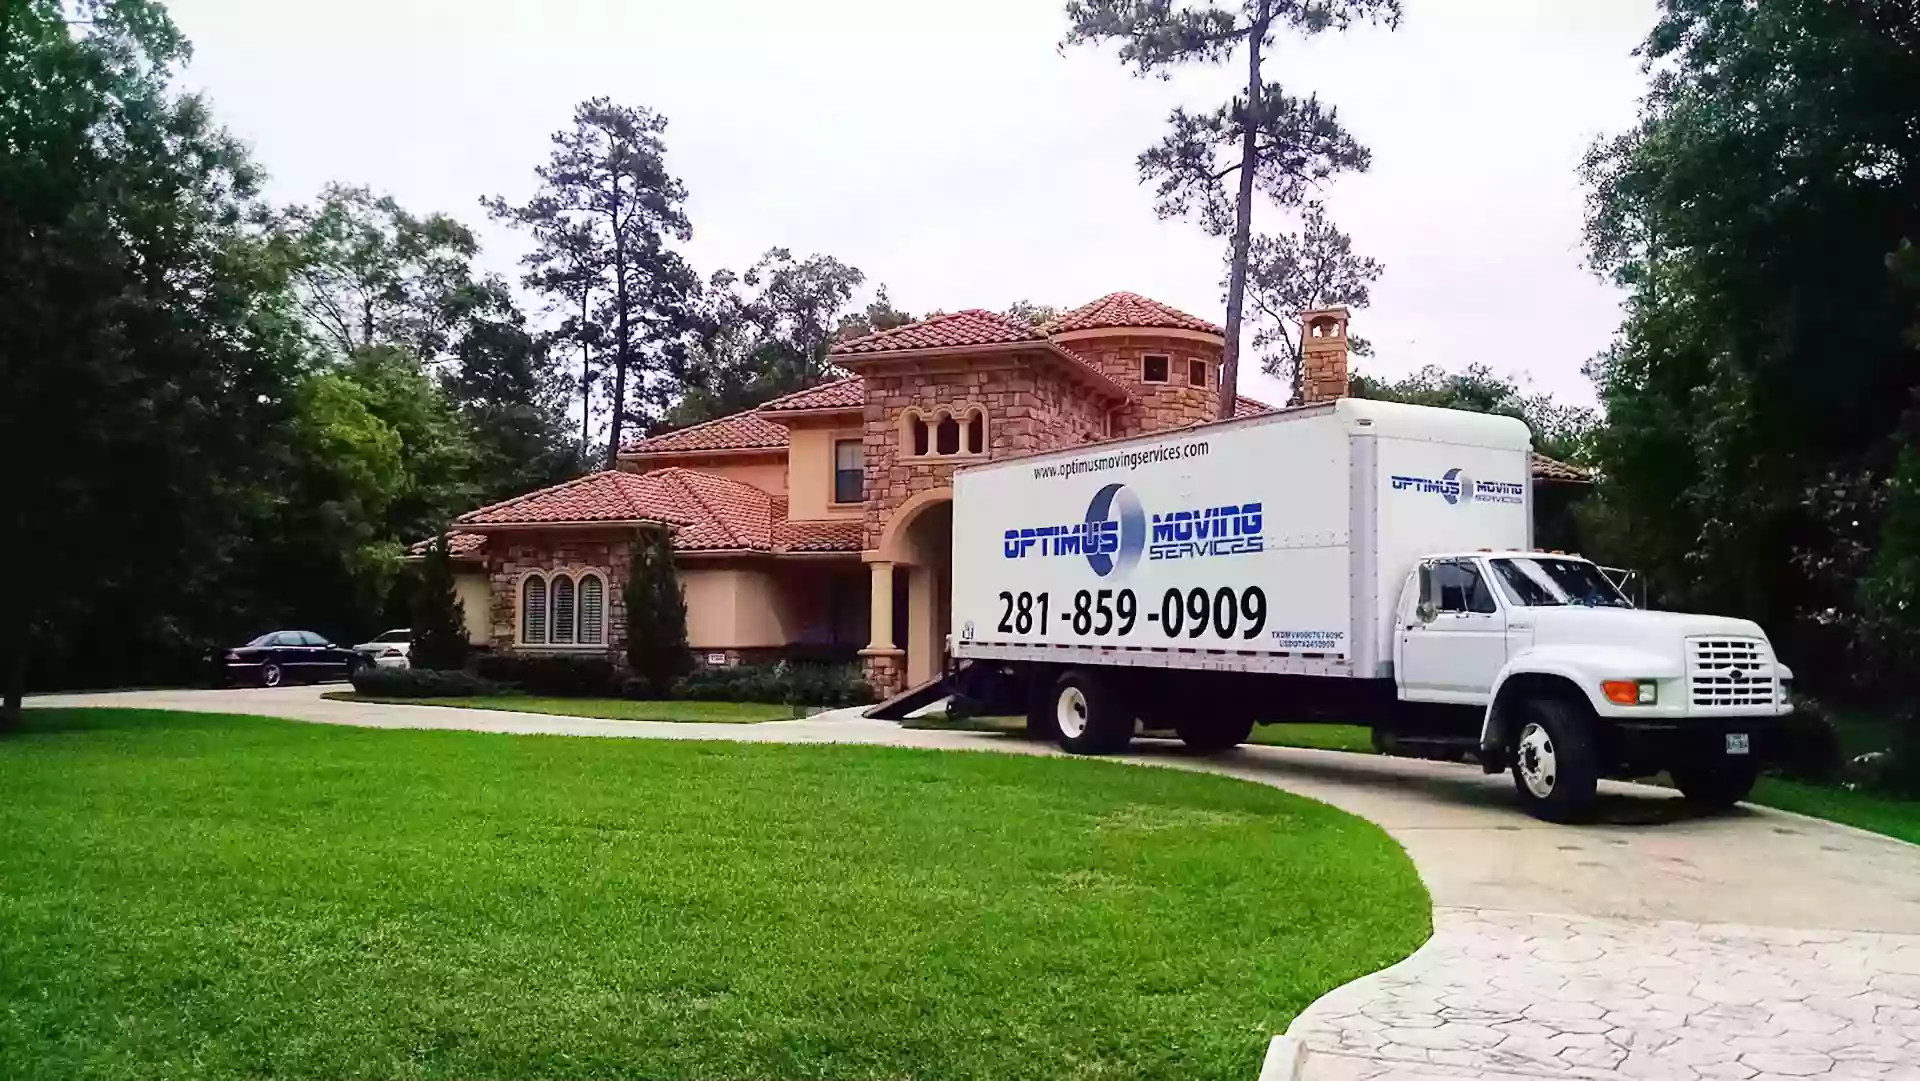 Optimus Moving Services LLC